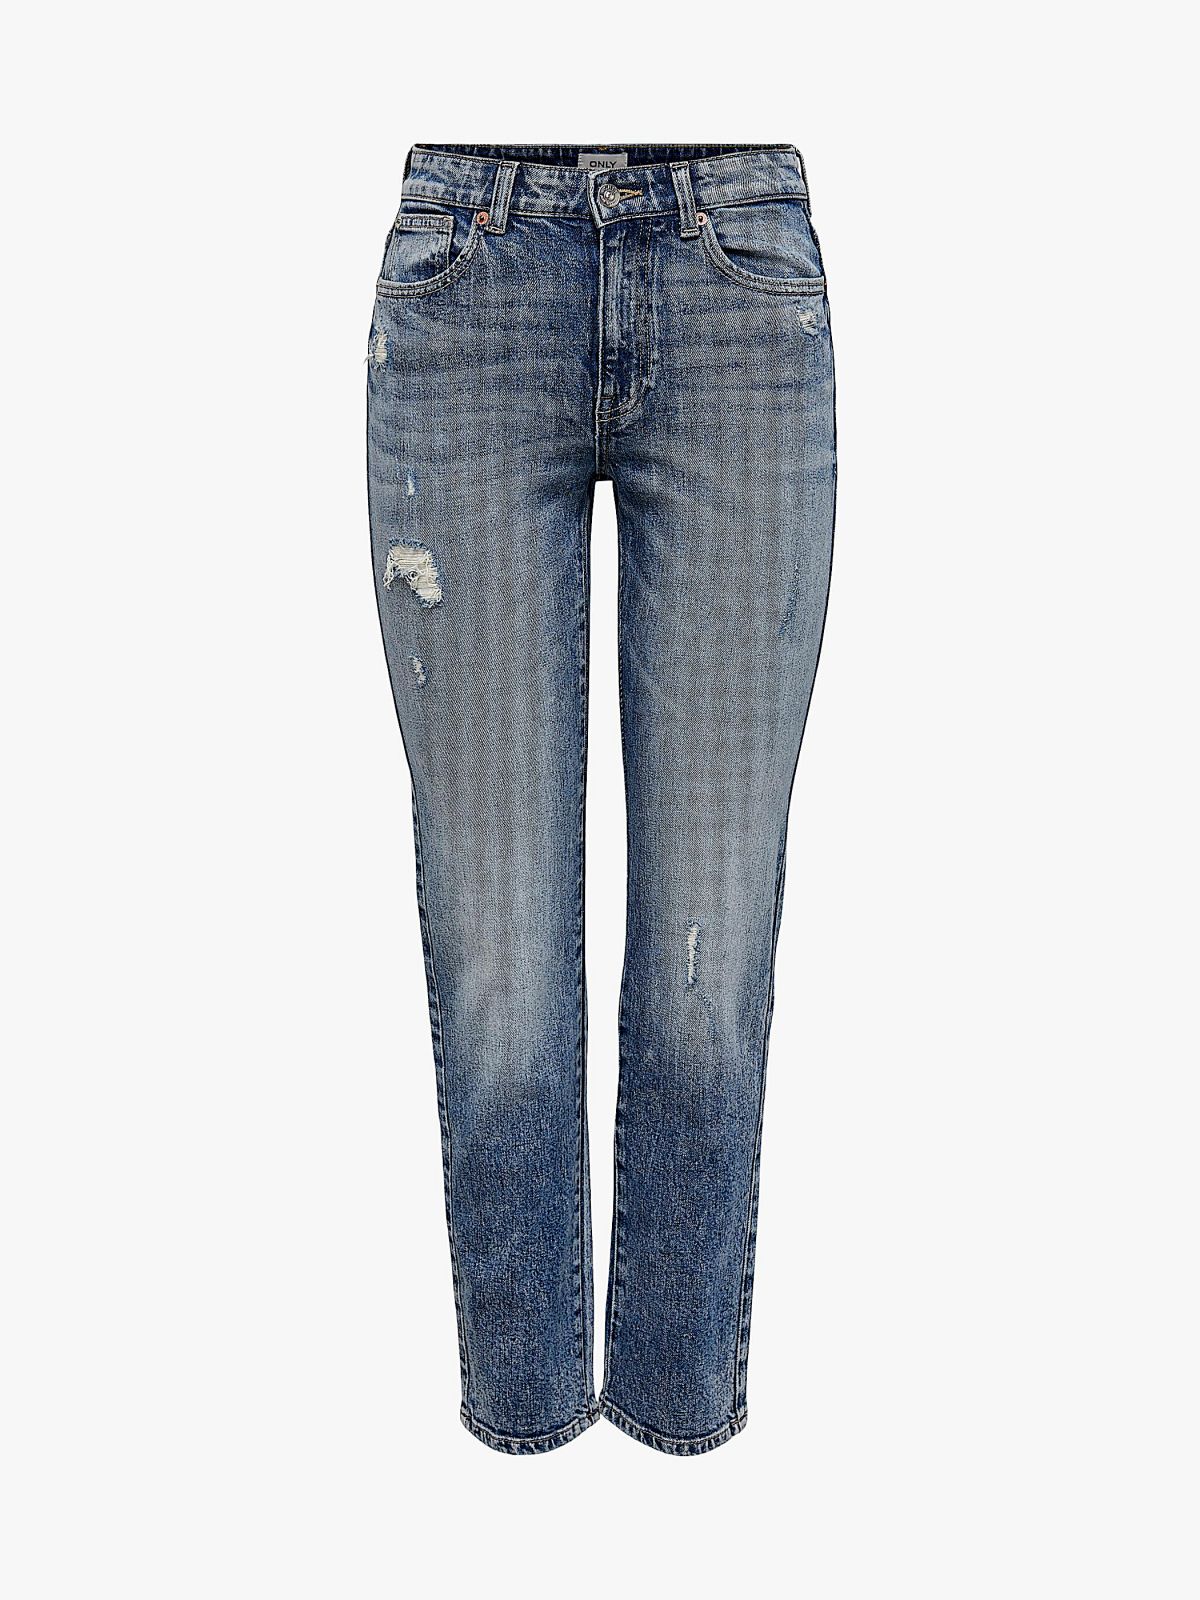  ג'ינס ארוך בשילוב קרעים / נשים של ONLY